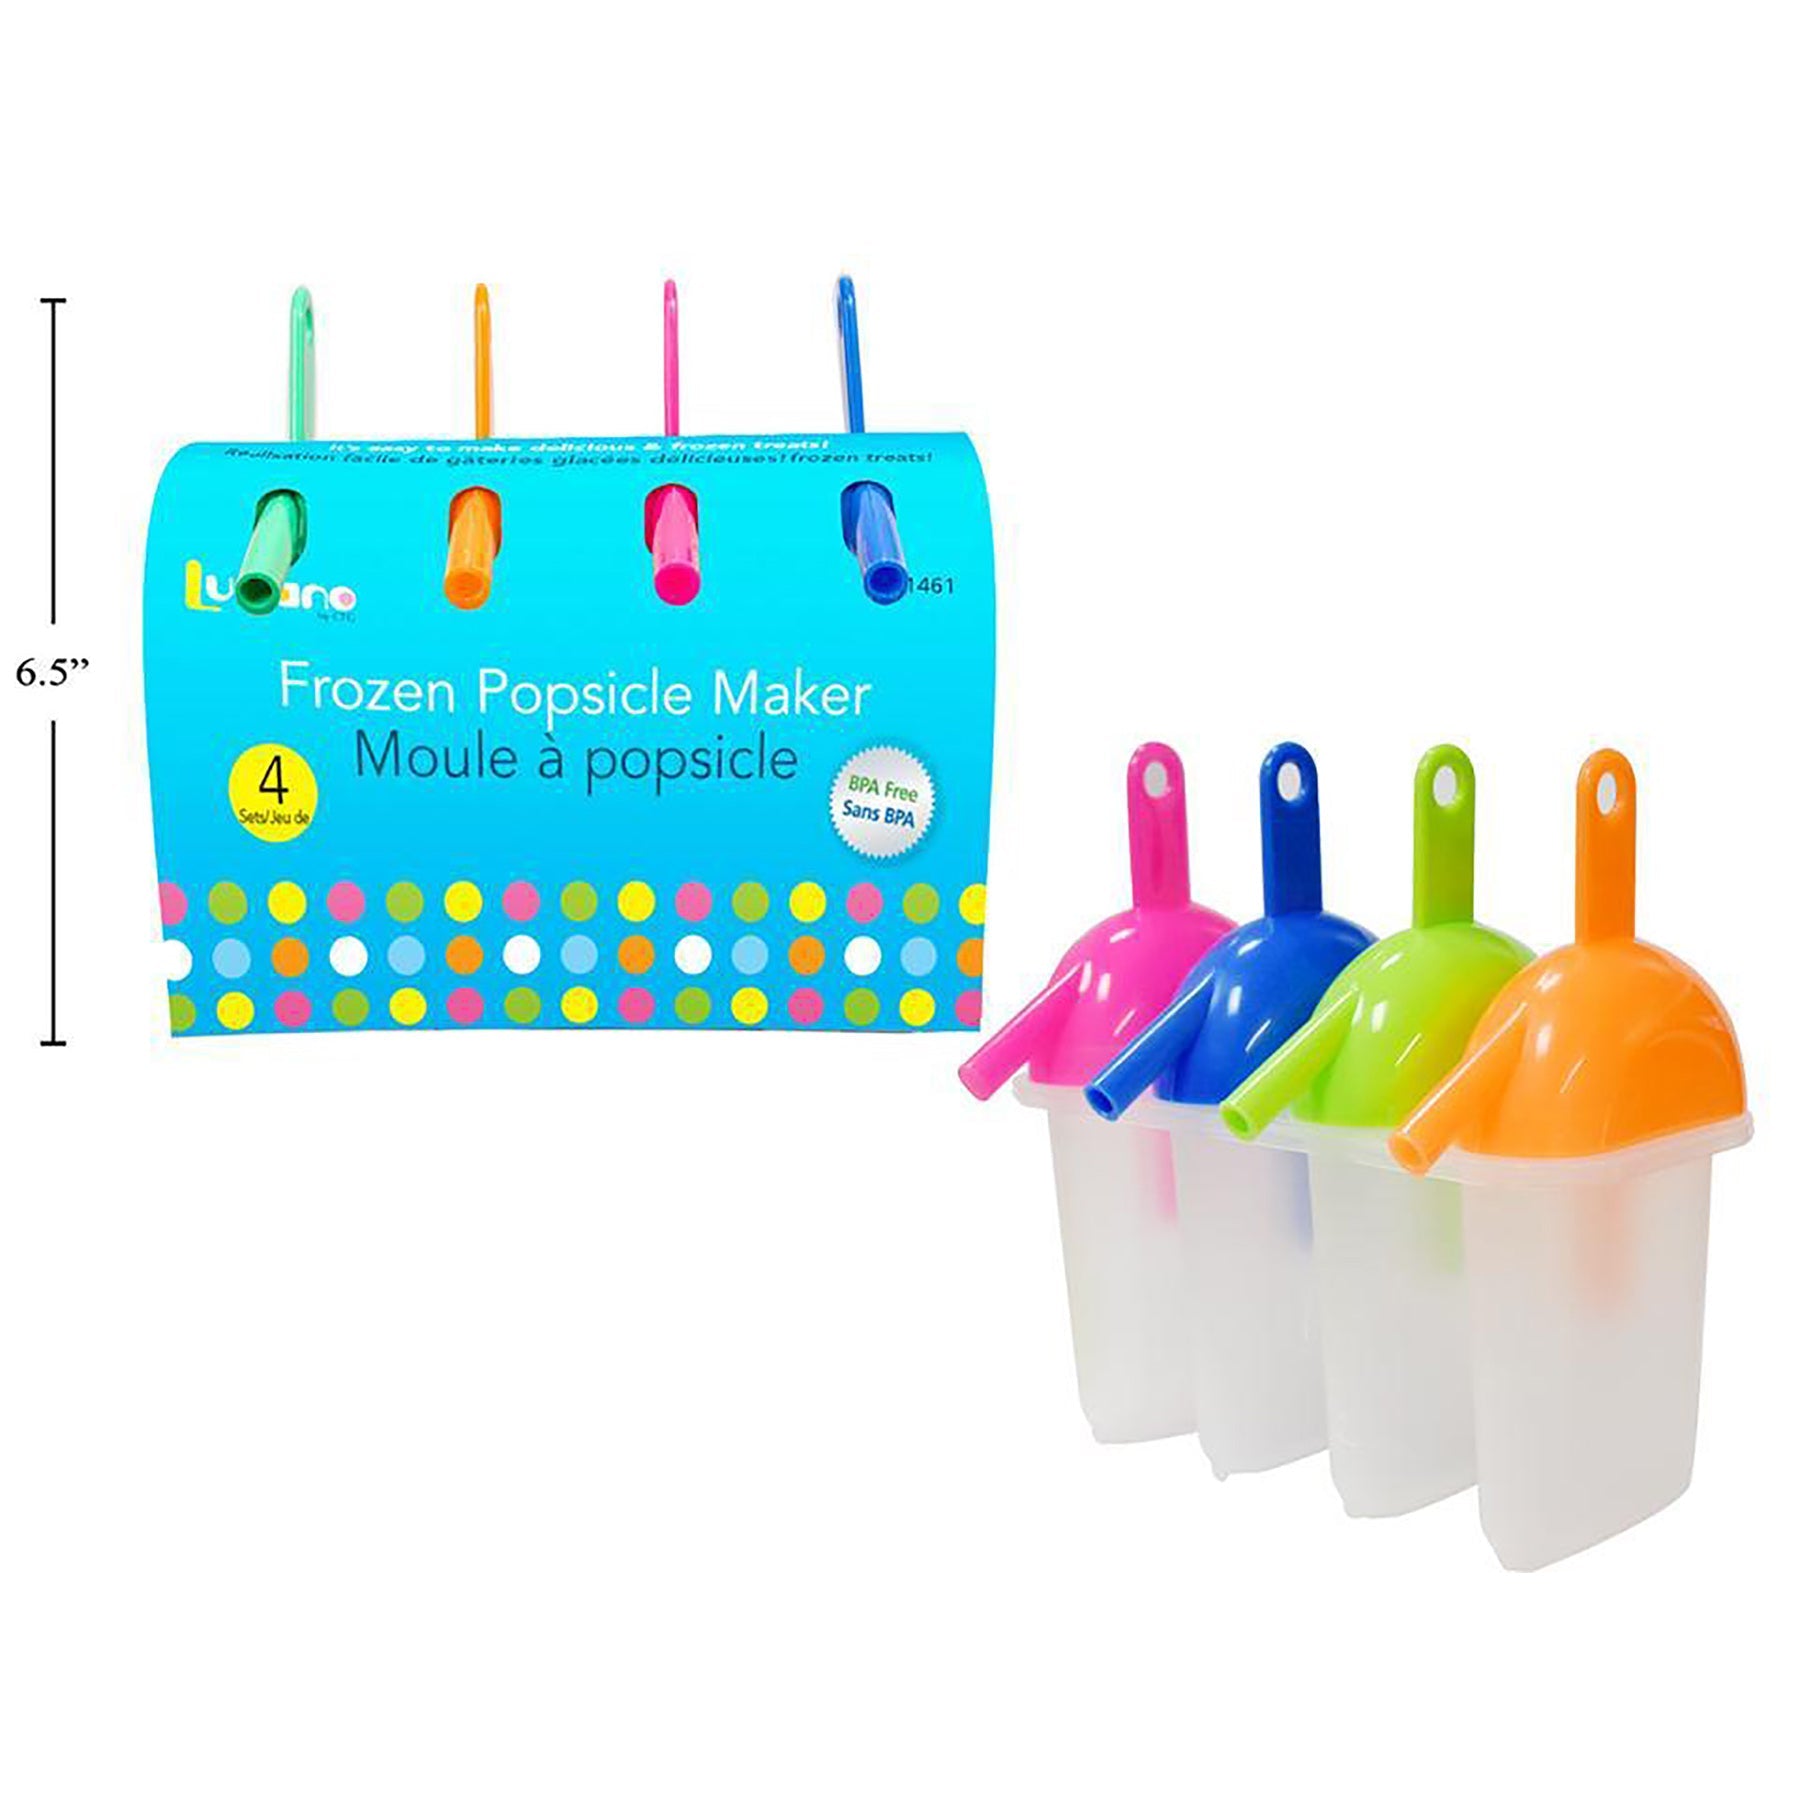 Luciano 4 Frozen Popsicle Maker Plastic